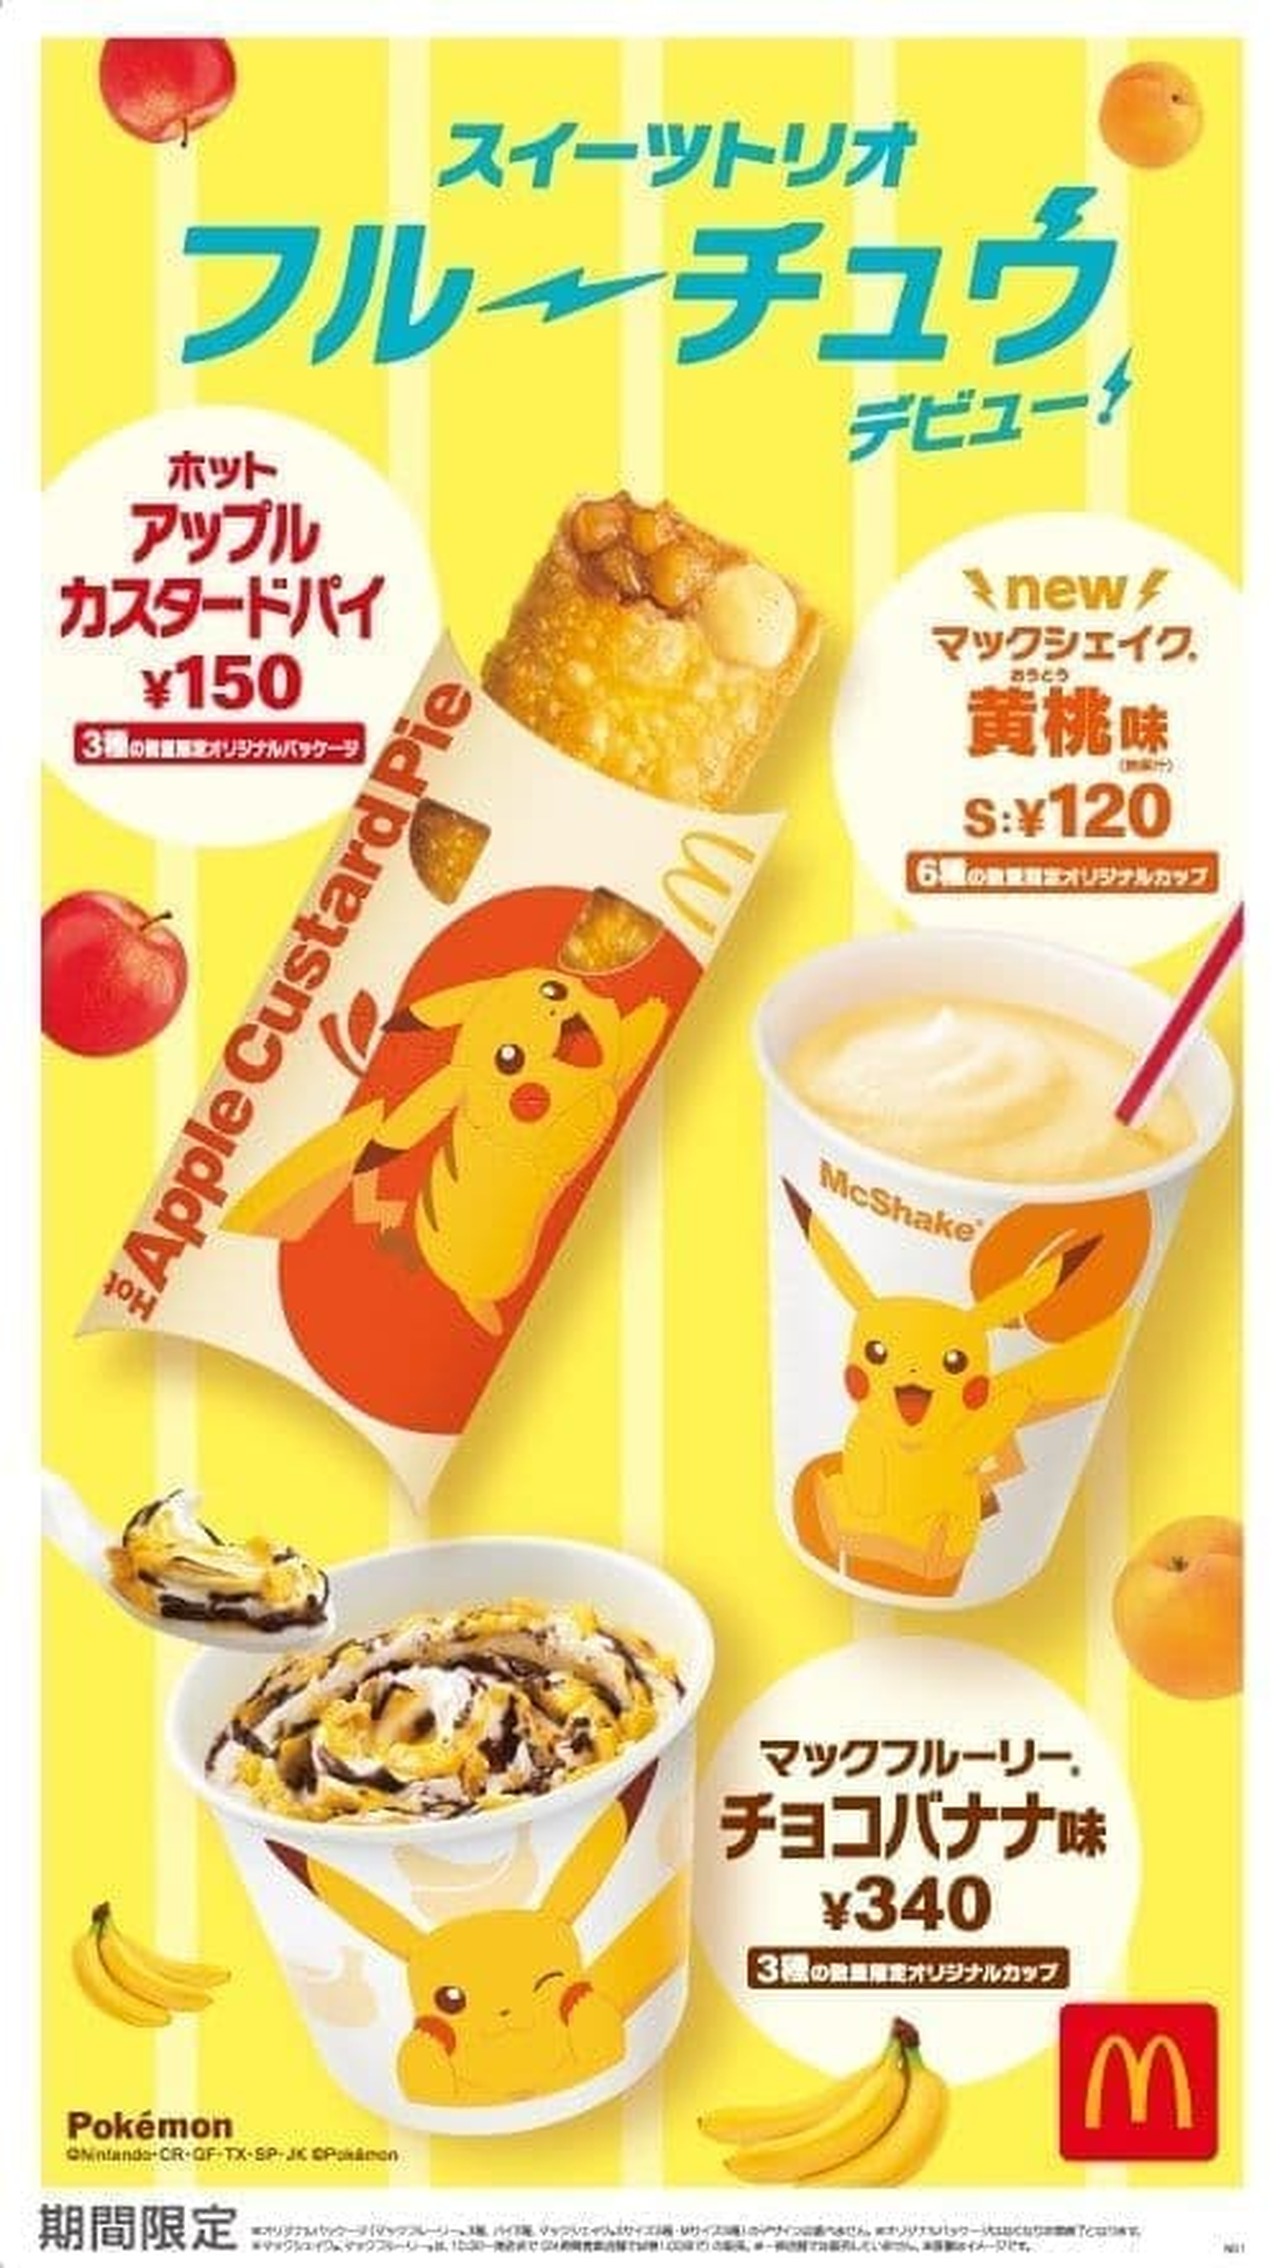 McDonald's x Pikachu "Sweets Trio Fruchu"